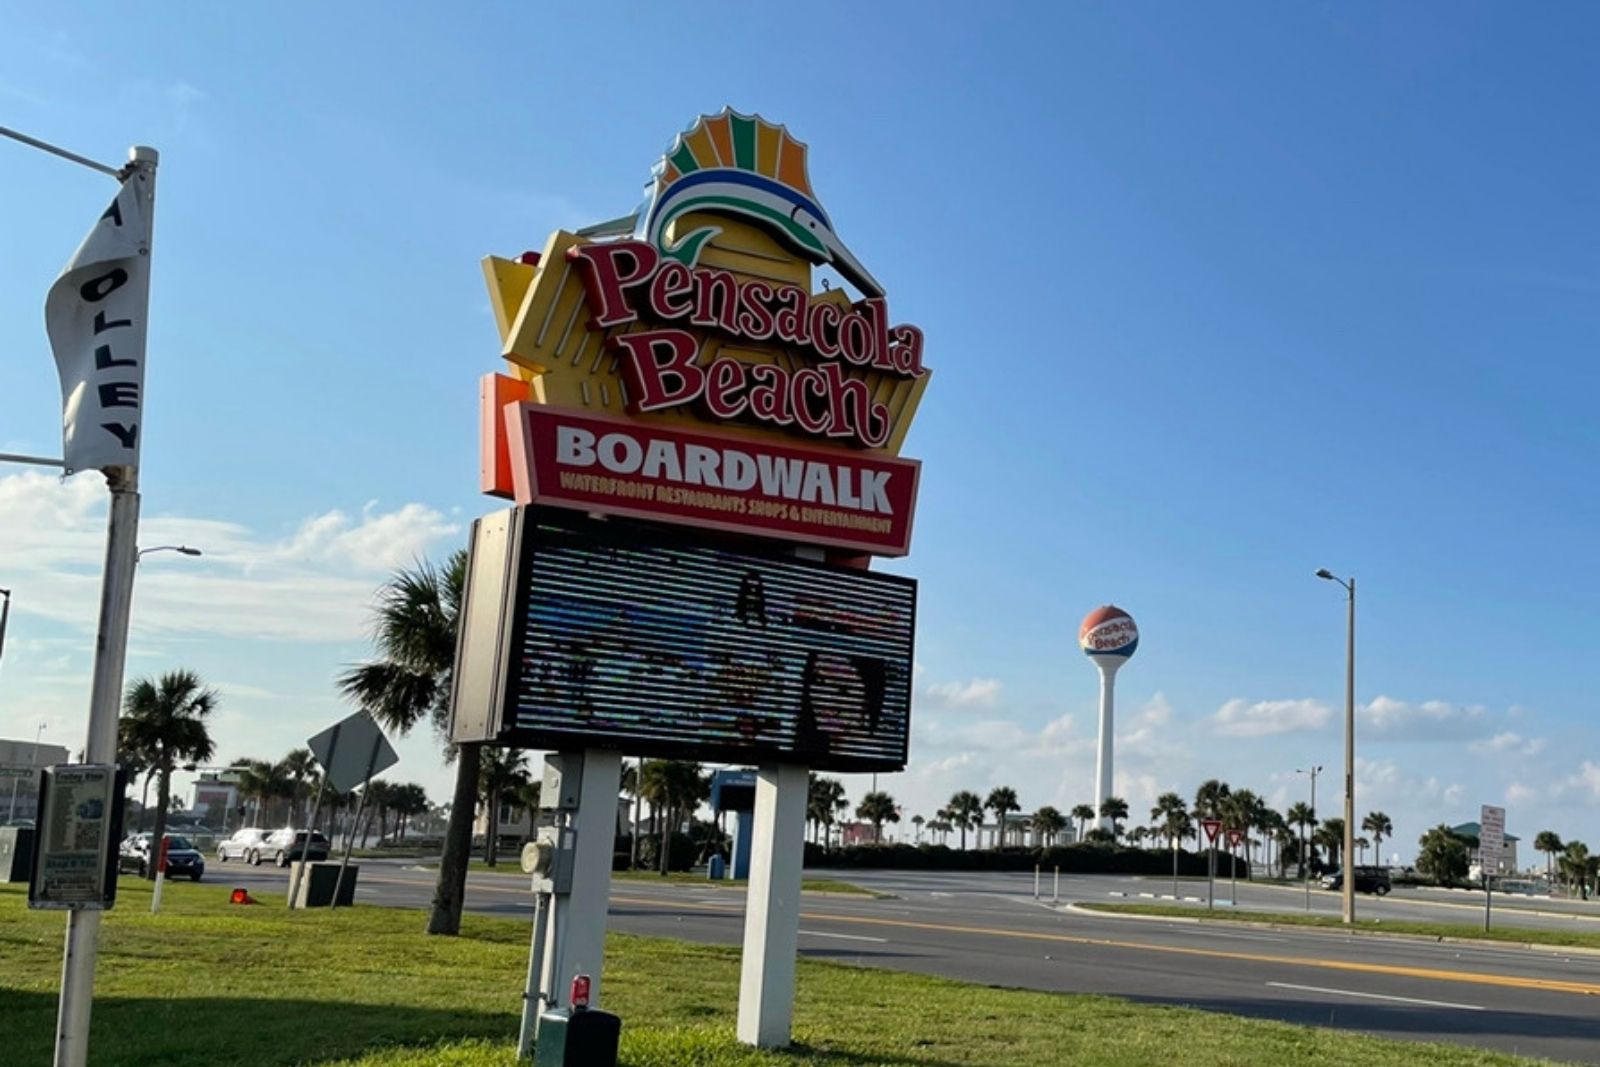 things to do in Pensacola Beach  - Pensacola beach boardwalk has shops, restaurants, bars, and a beach area